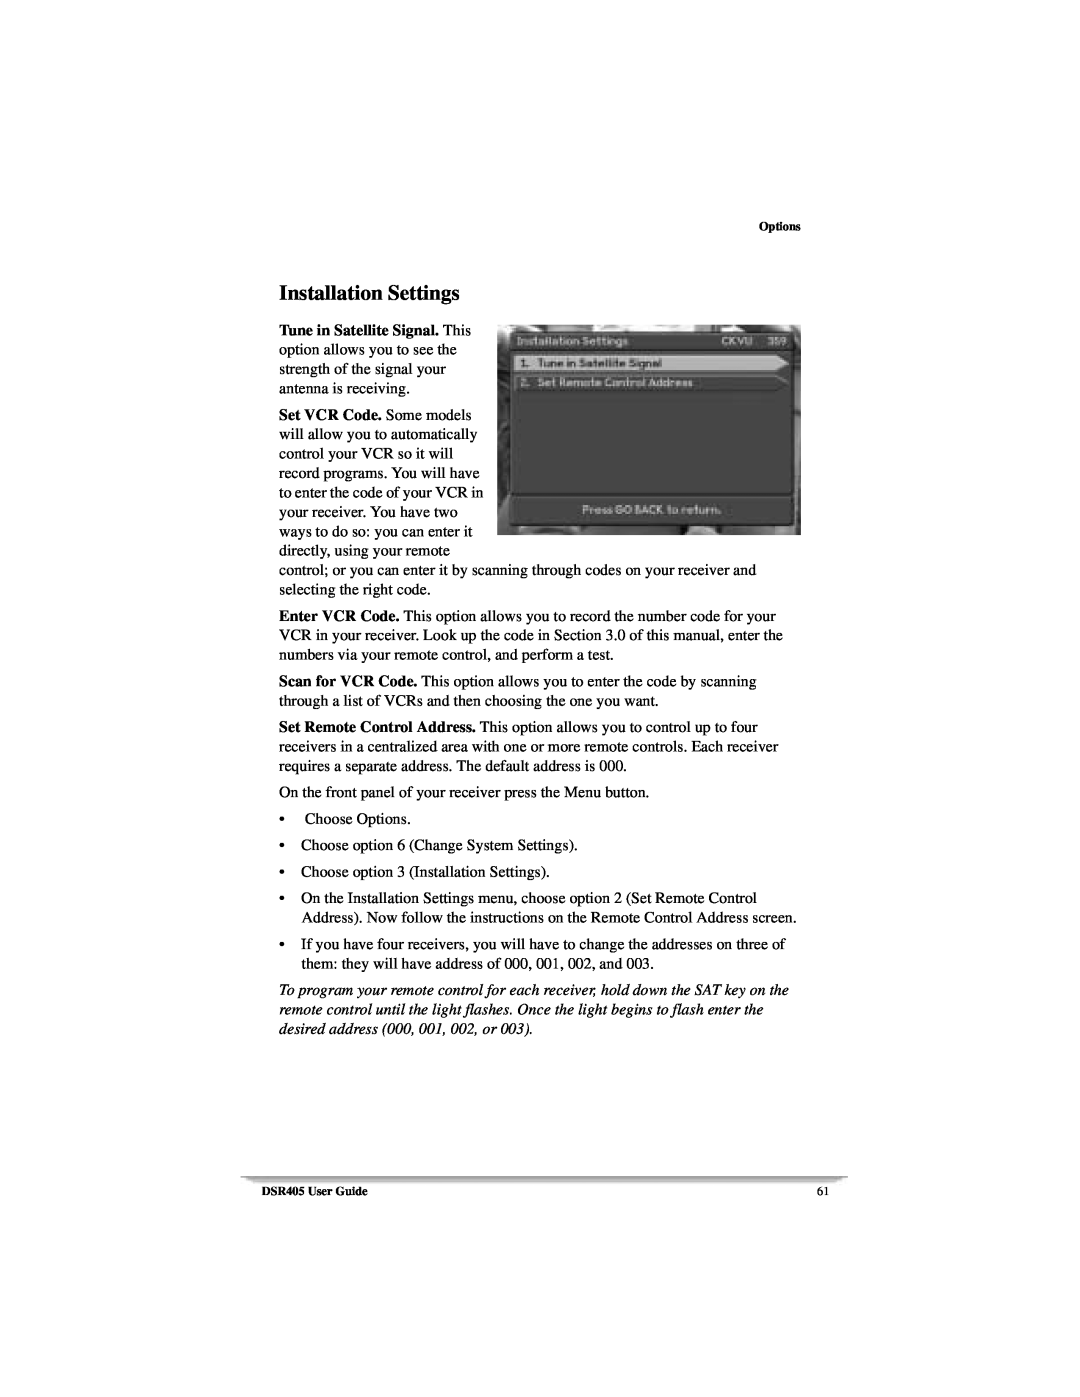 Motorola DSR405 manual Installation Settings 